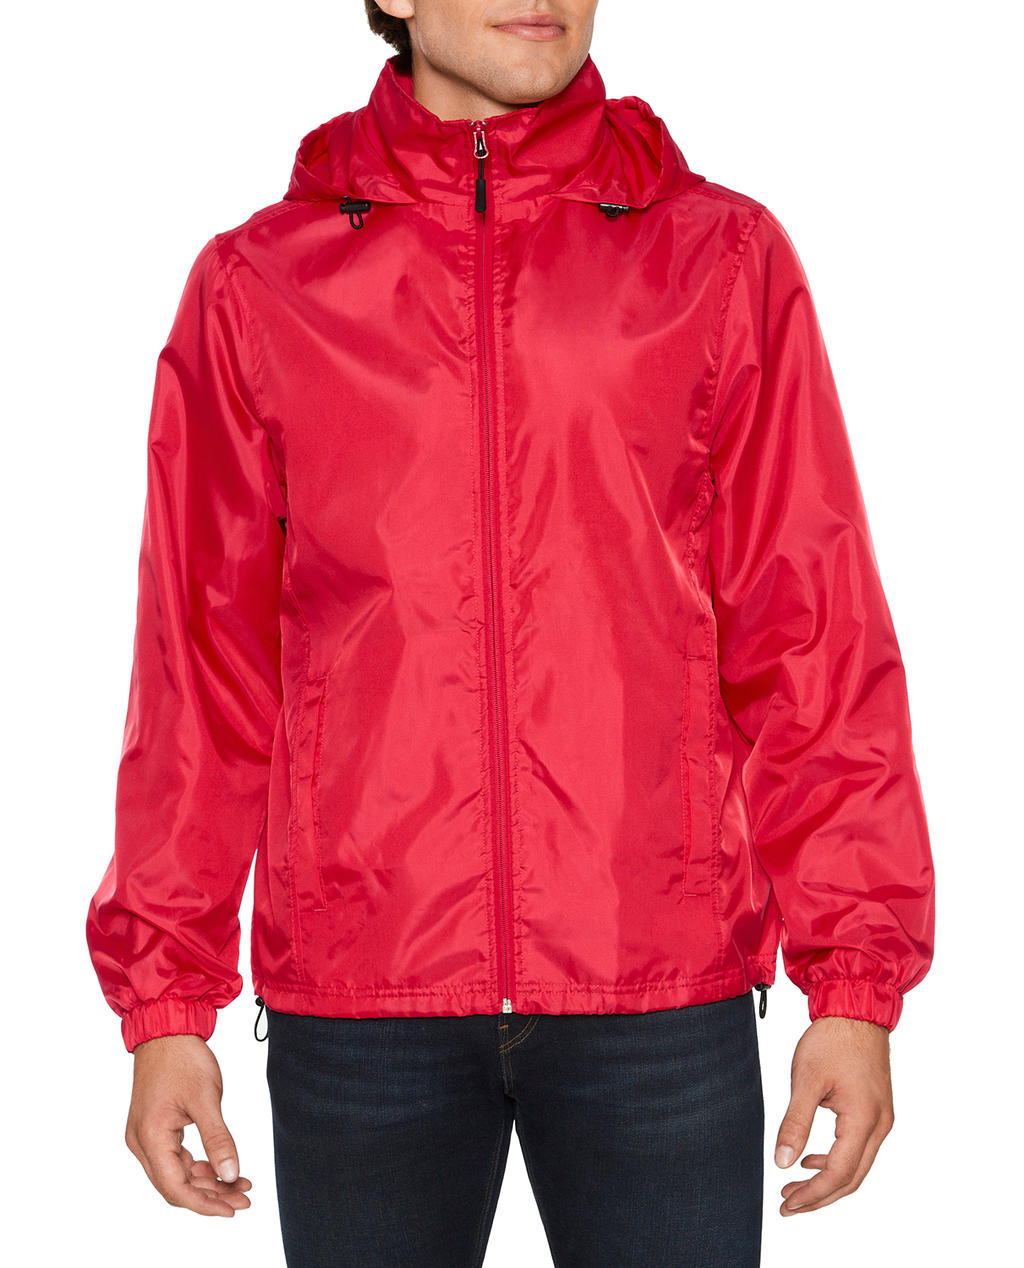  Hammer? Unisex Windwear Jacket in Farbe Red